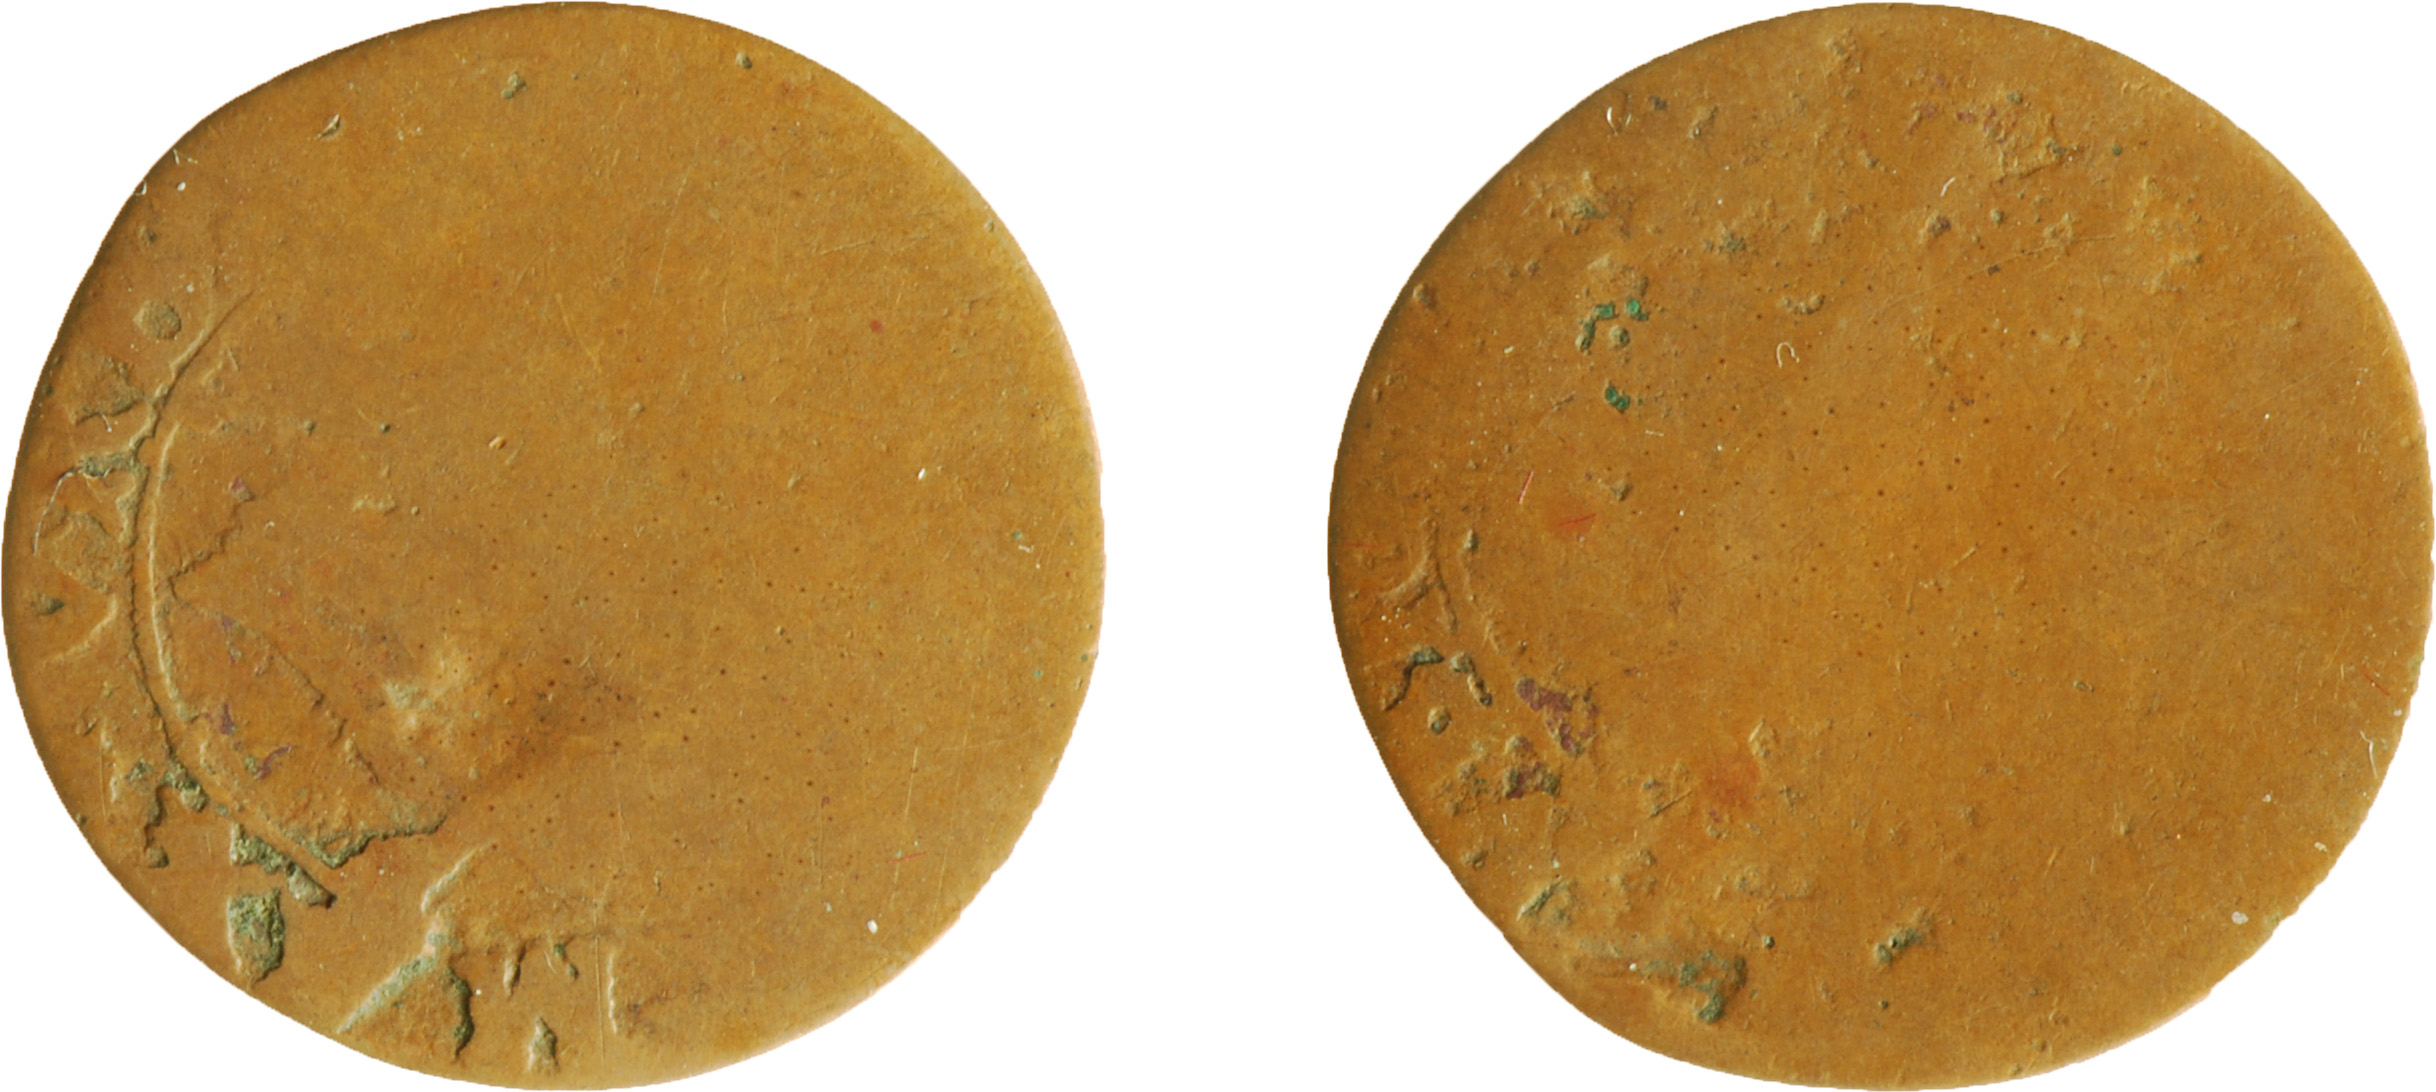 moneta - doppio tornese (XVII)